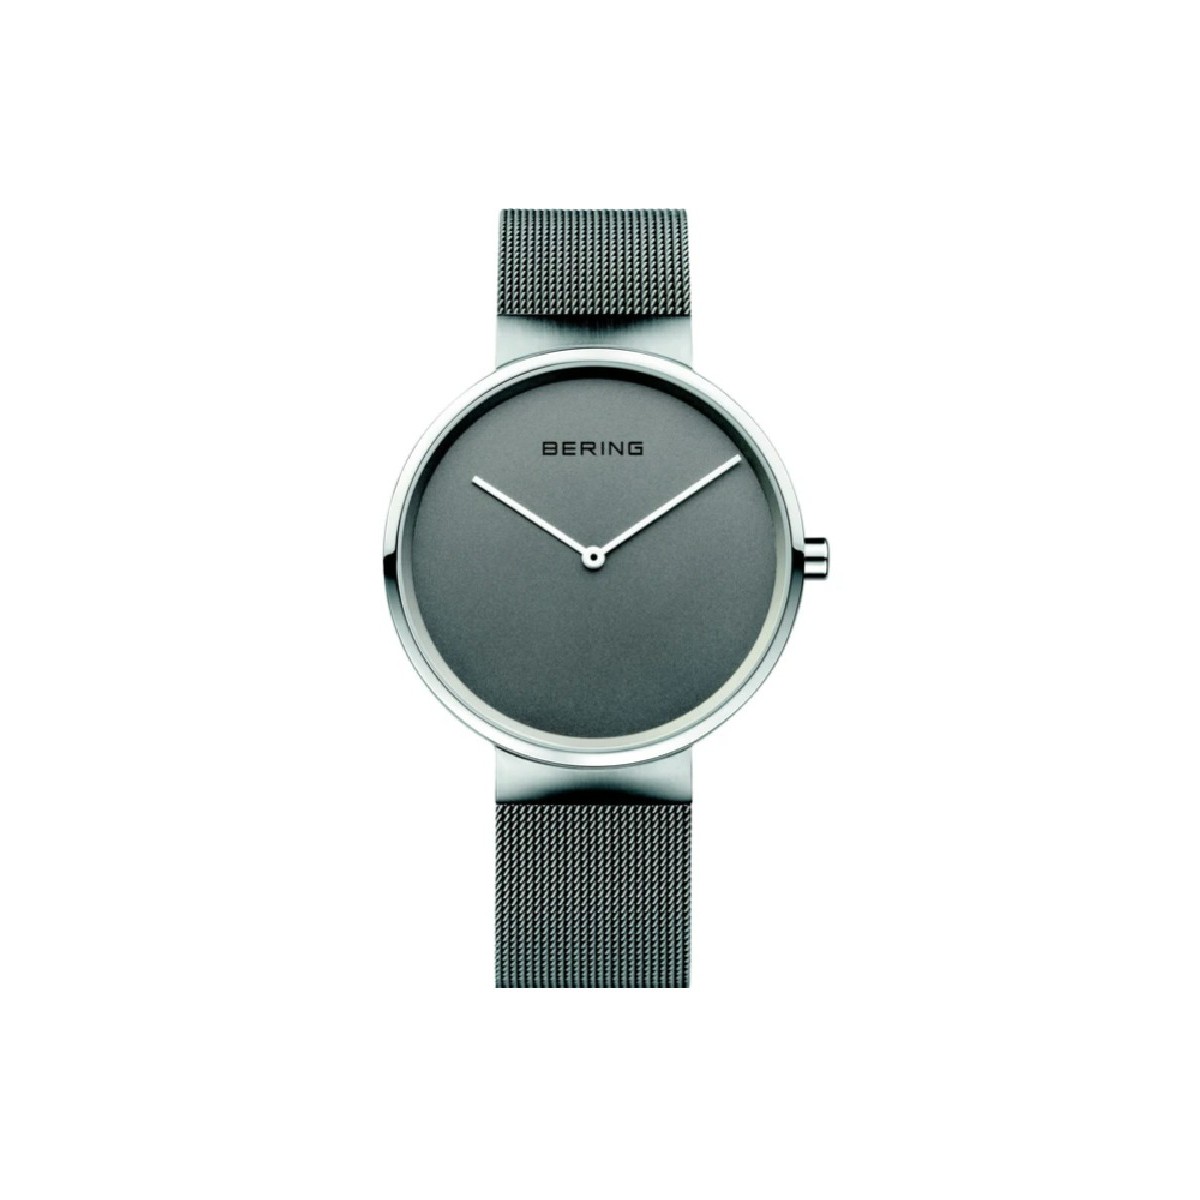 Reloj minimalista gris de hombre - 14539-77